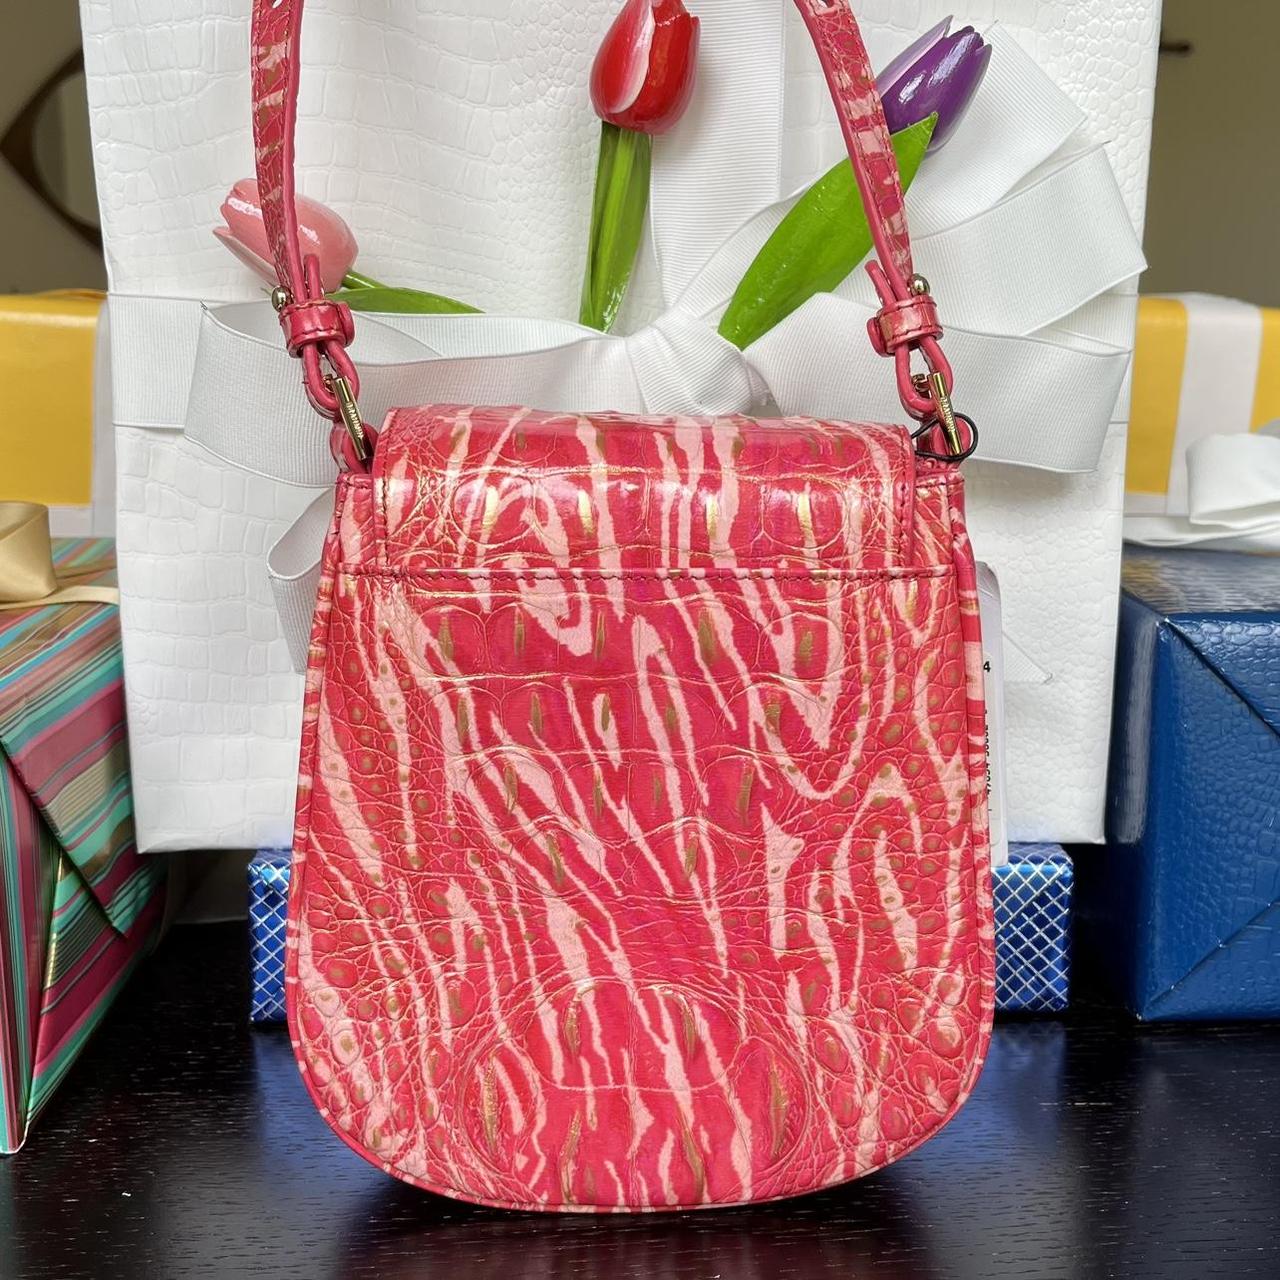 Brahmin Pink Handbags